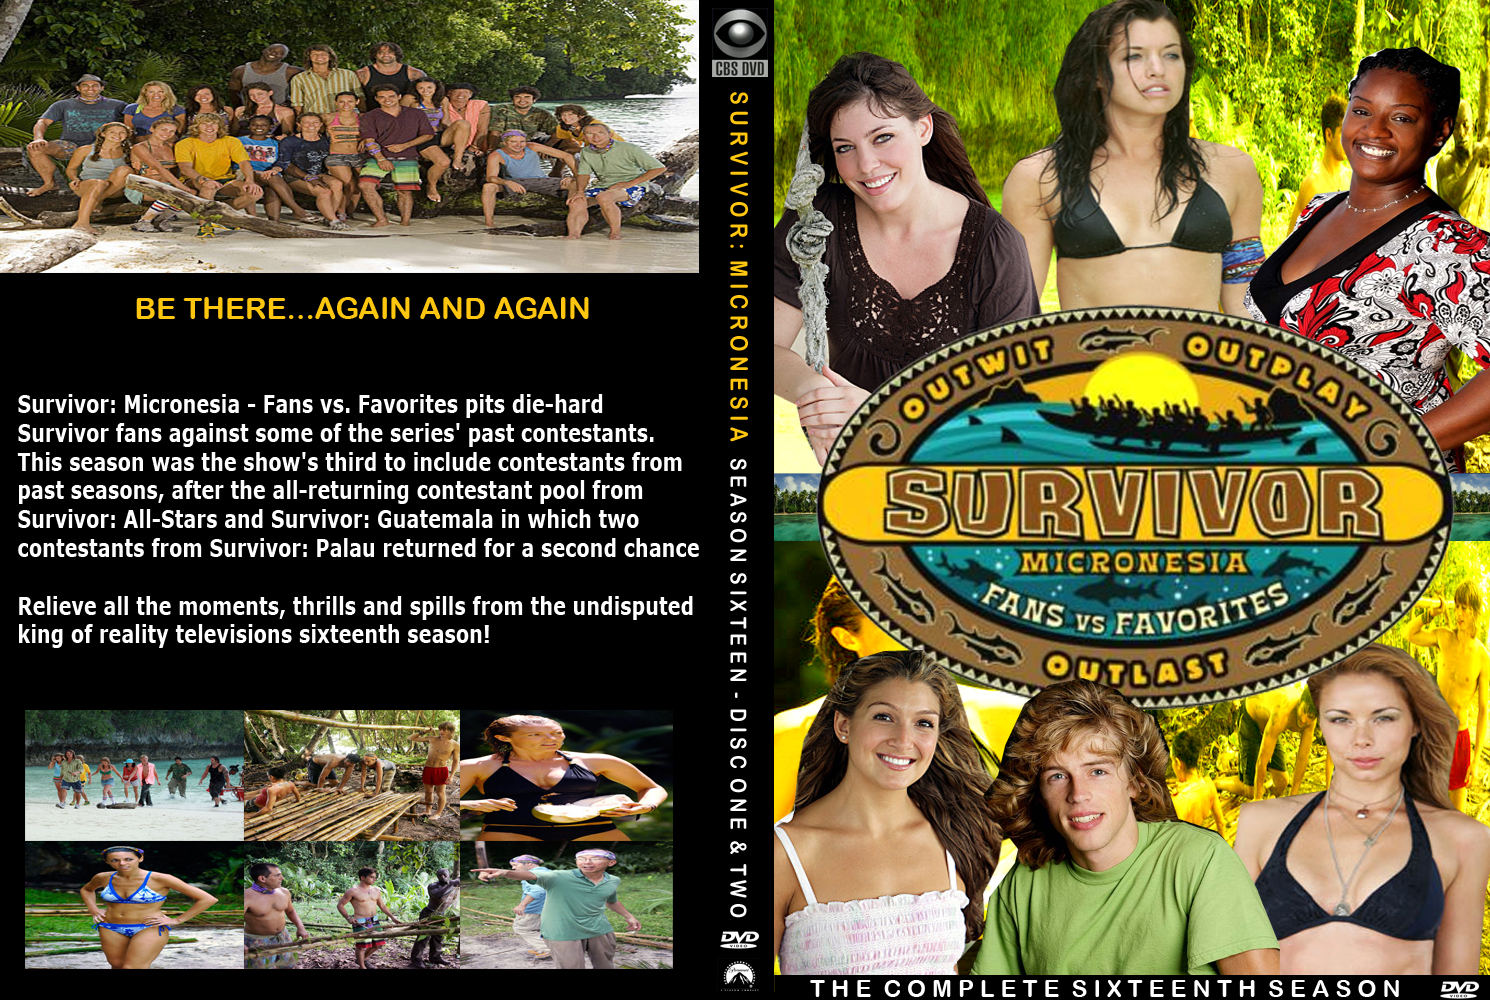 http://fc03.deviantart.net/fs30/f/2008/170/e/d/Survivor_Micronesia_DVD_Cover_by_NYC55david.jpg